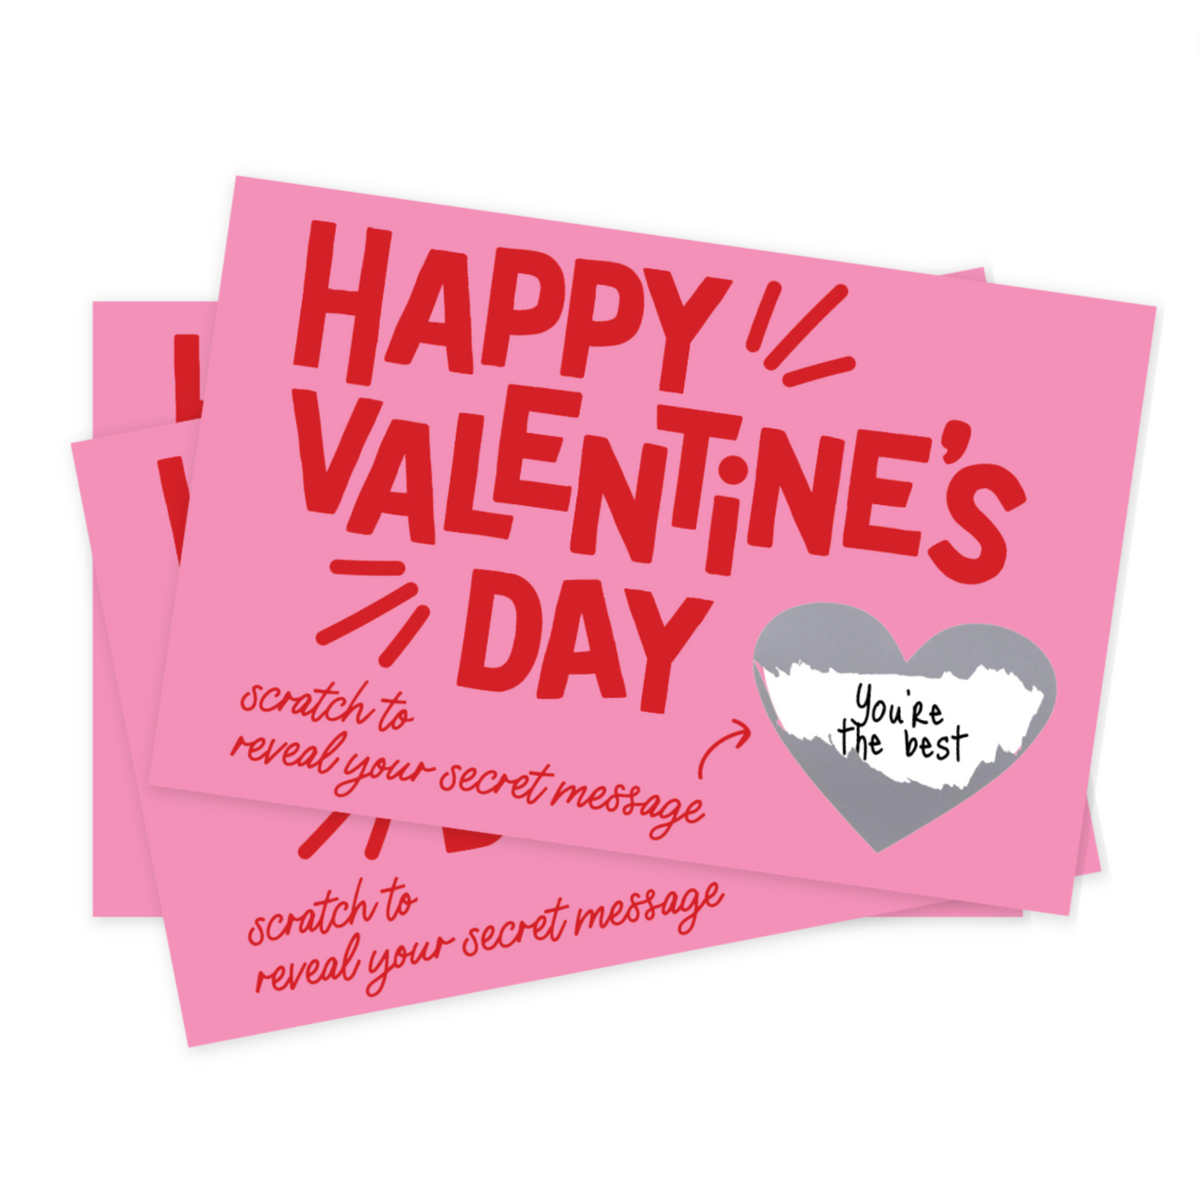 Valentine Scratch-Off Cards, 24 pk